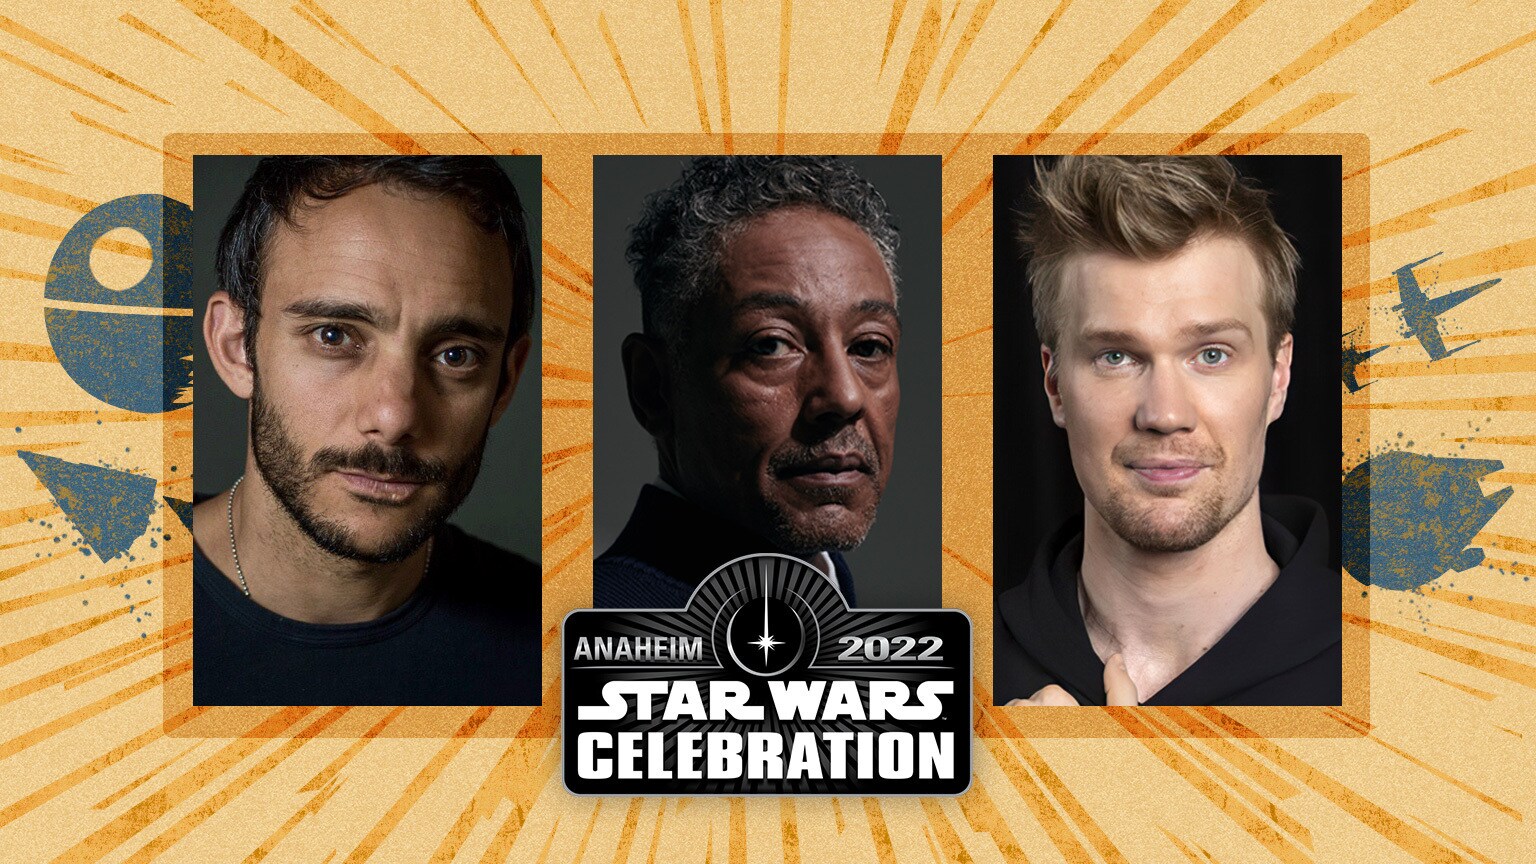 Giancarlo Esposito, Joonas Suotamo, and More Confirmed for Star Wars Celebration Anaheim 2022